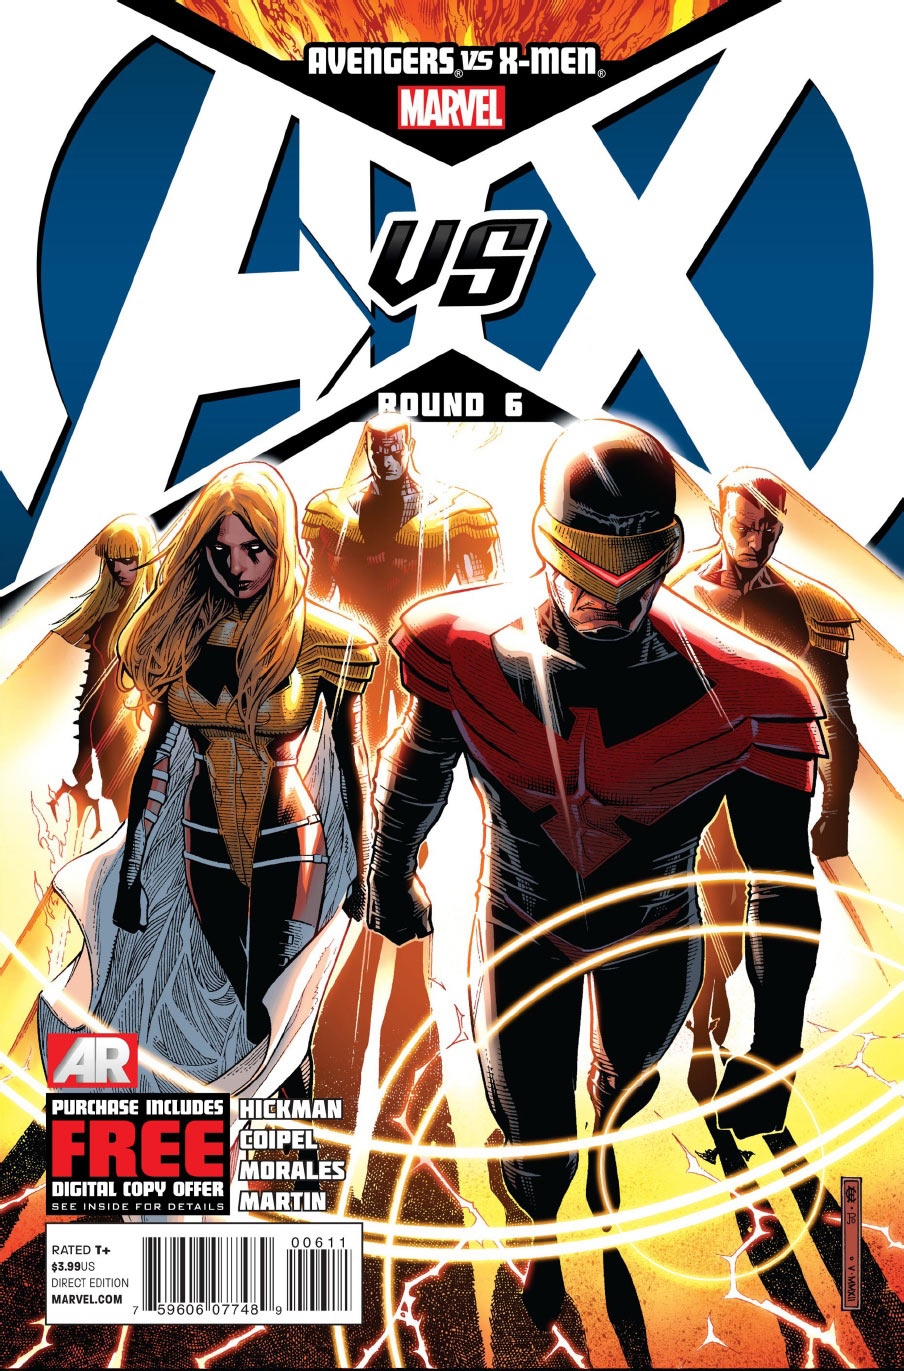 High Resolution Wallpaper | Avengers Vs. X-Men 904x1371 px